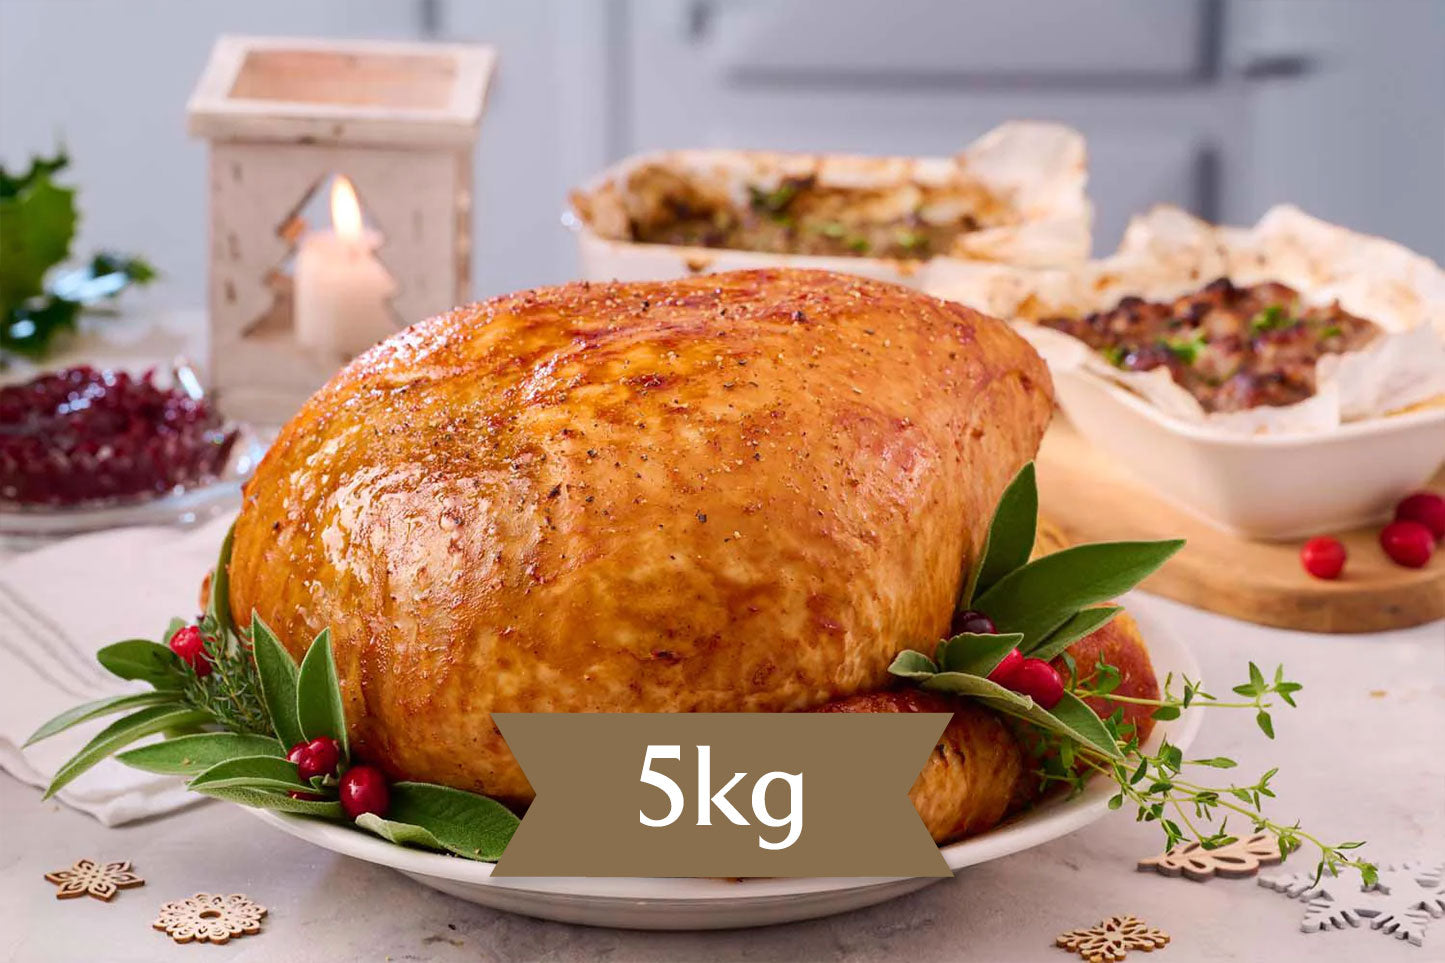 Free Range Bronze Christmas Turkey Crown 5kg